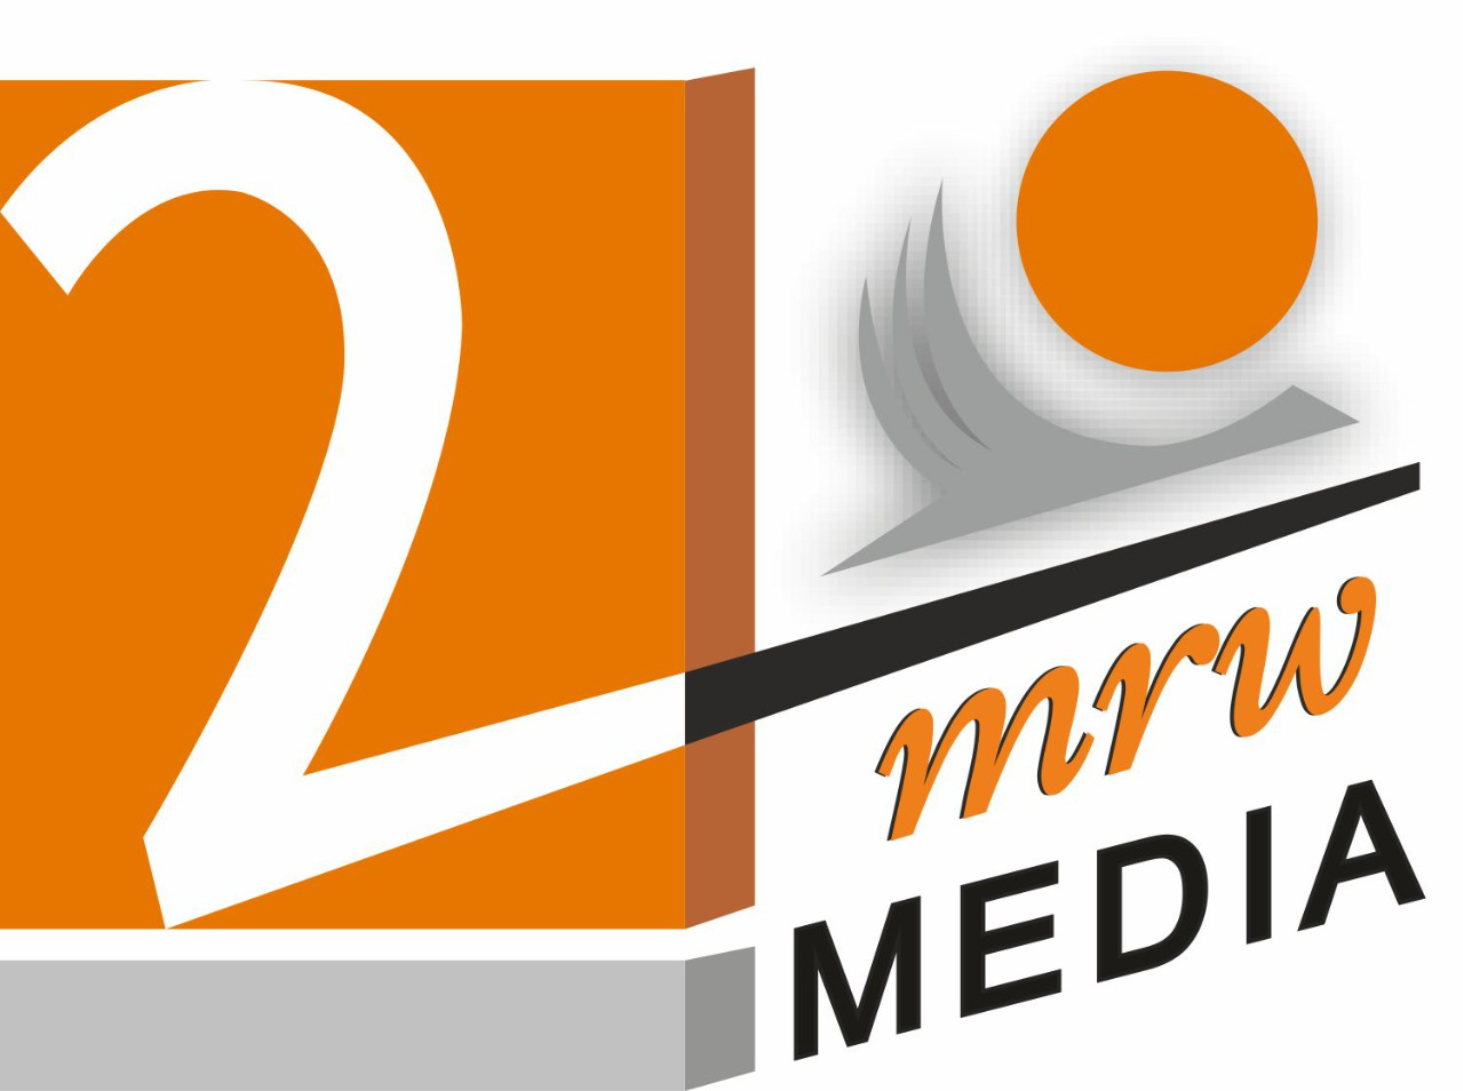 Digital Marketing Agency in PCMC - 2Mrw Media